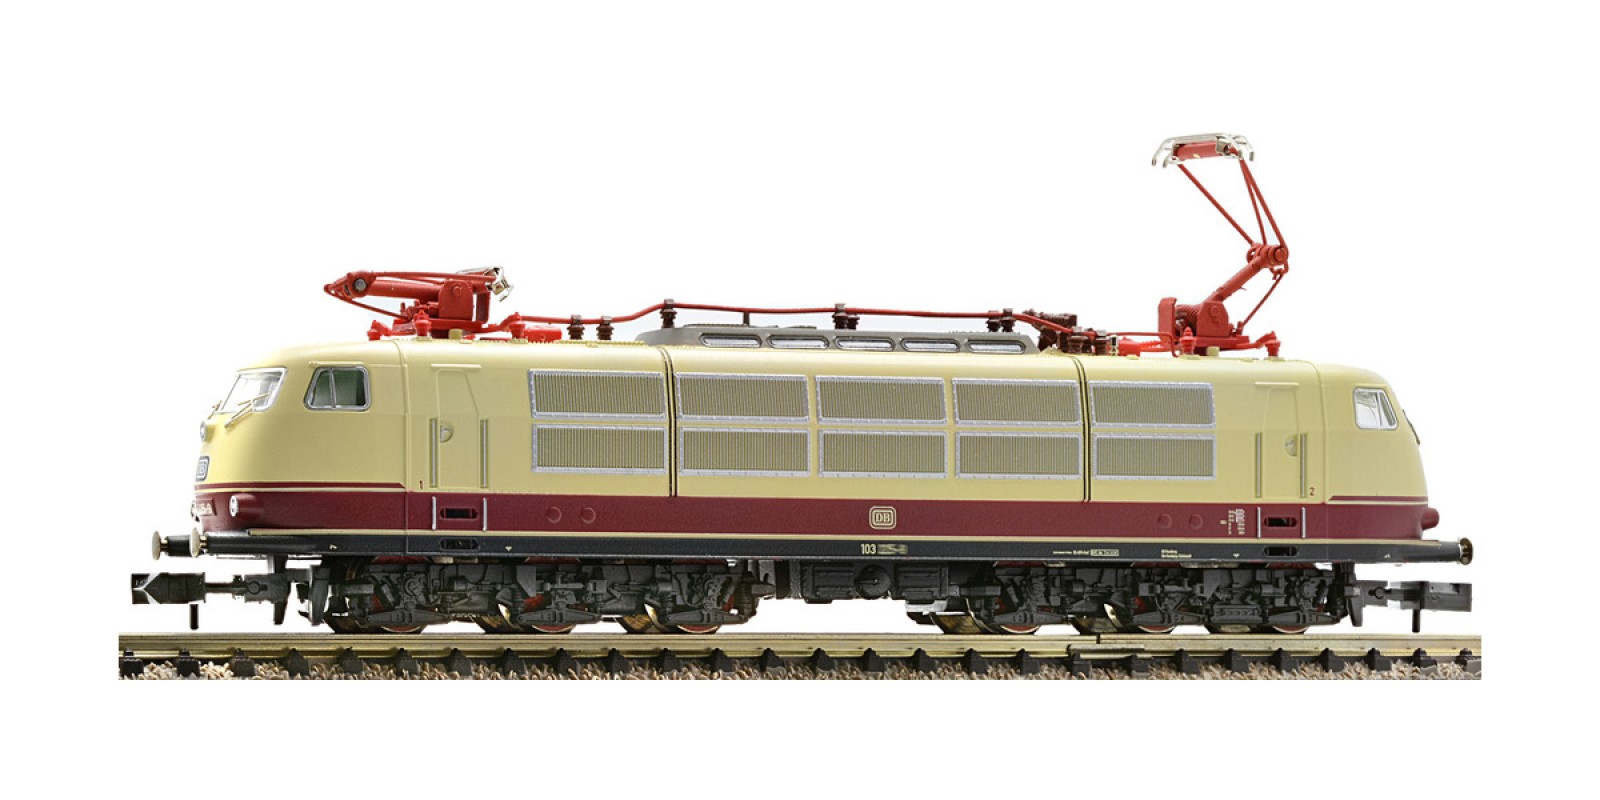 FL737811  Electric locomotive class 103.1, DB